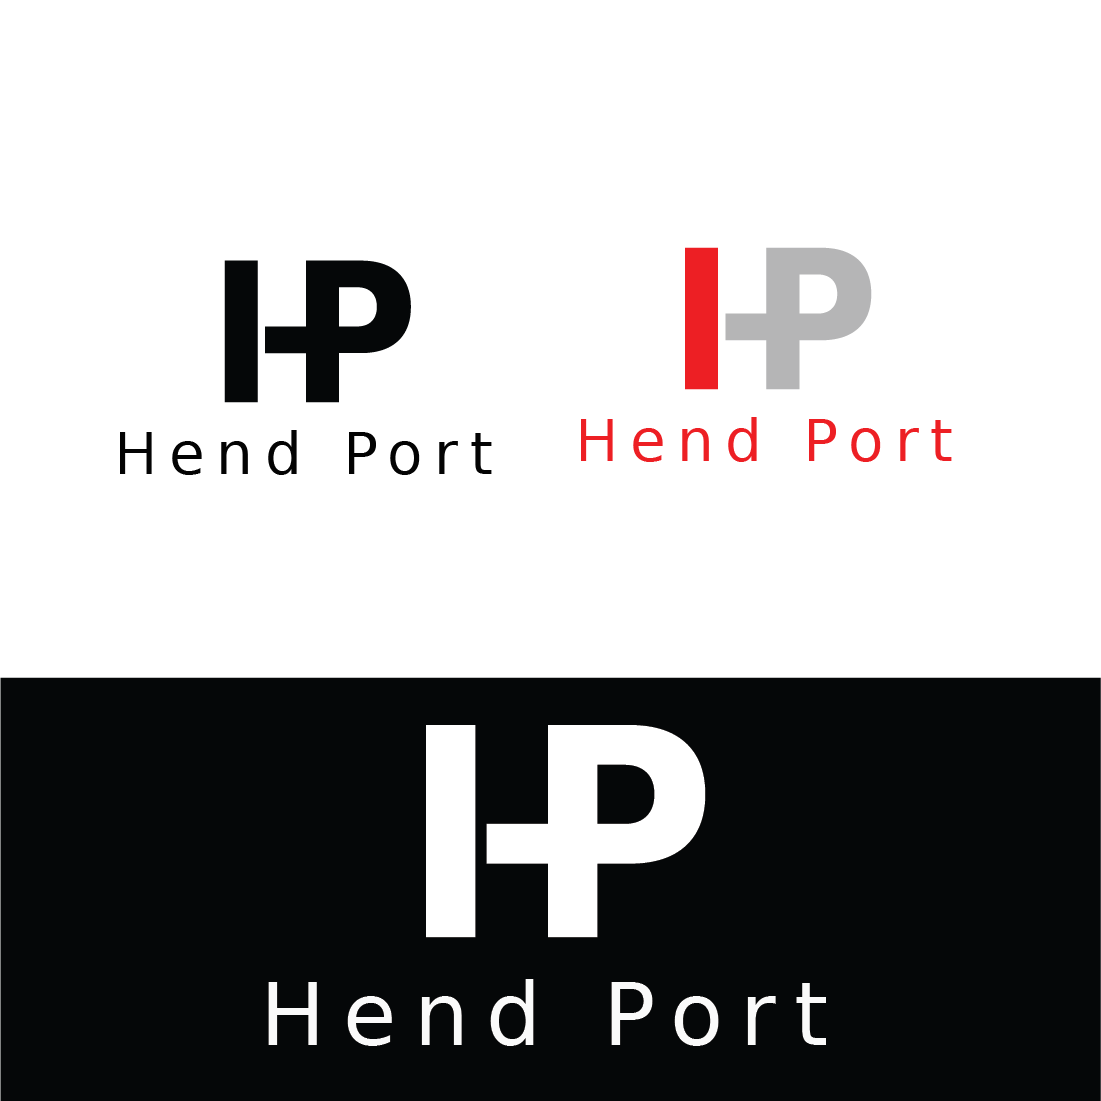 HP letter Logo cover image.